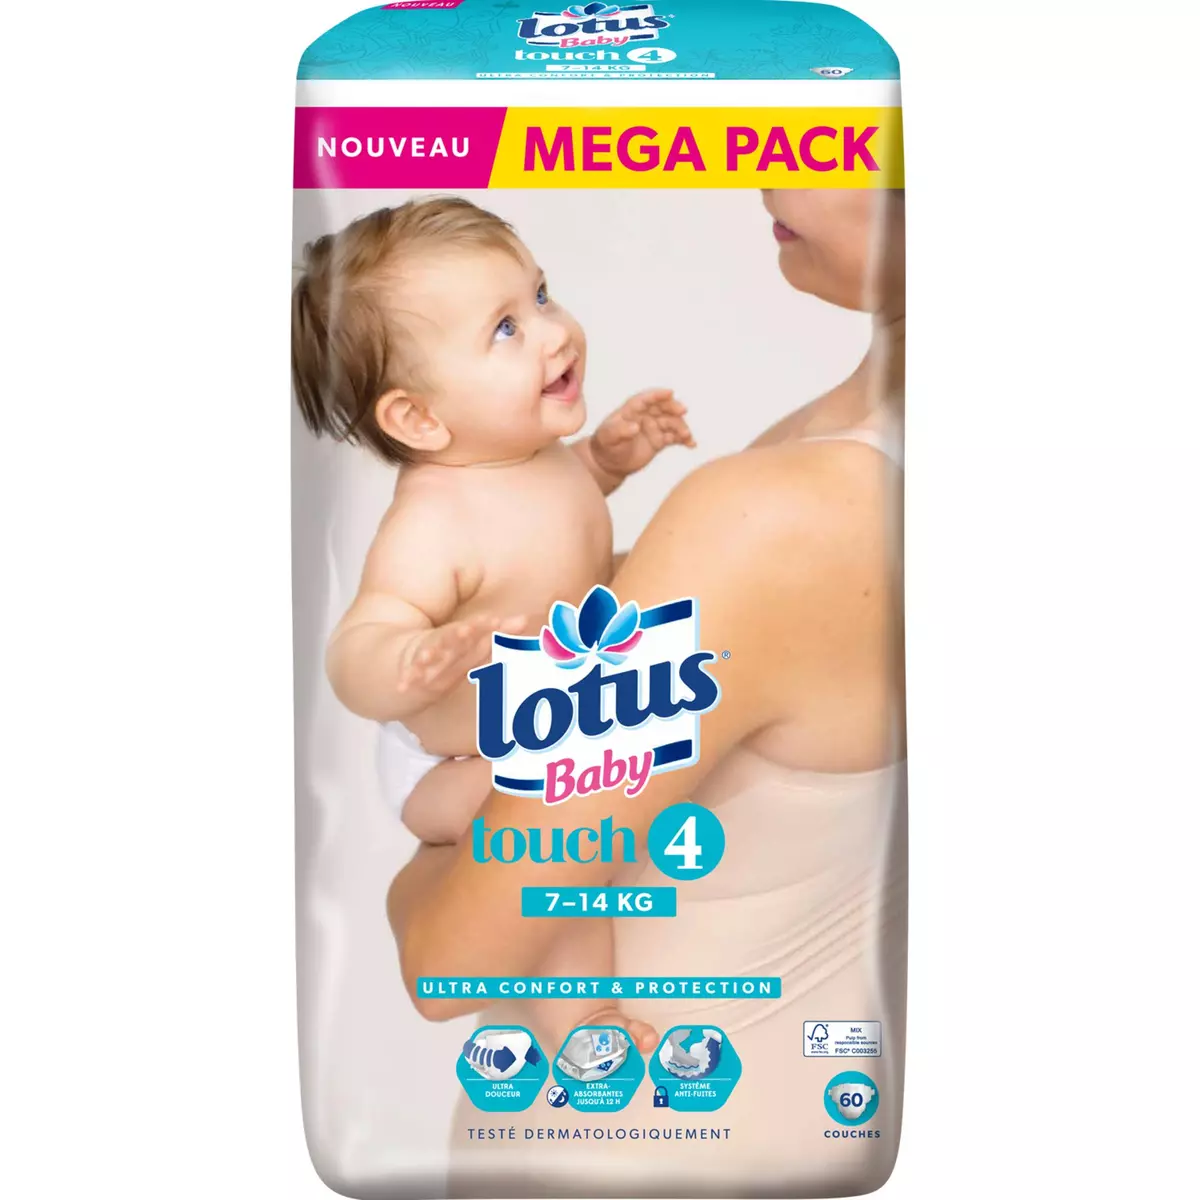 LOTUS Lotus baby touch change 7/14kg x60 taille 4 méga pack